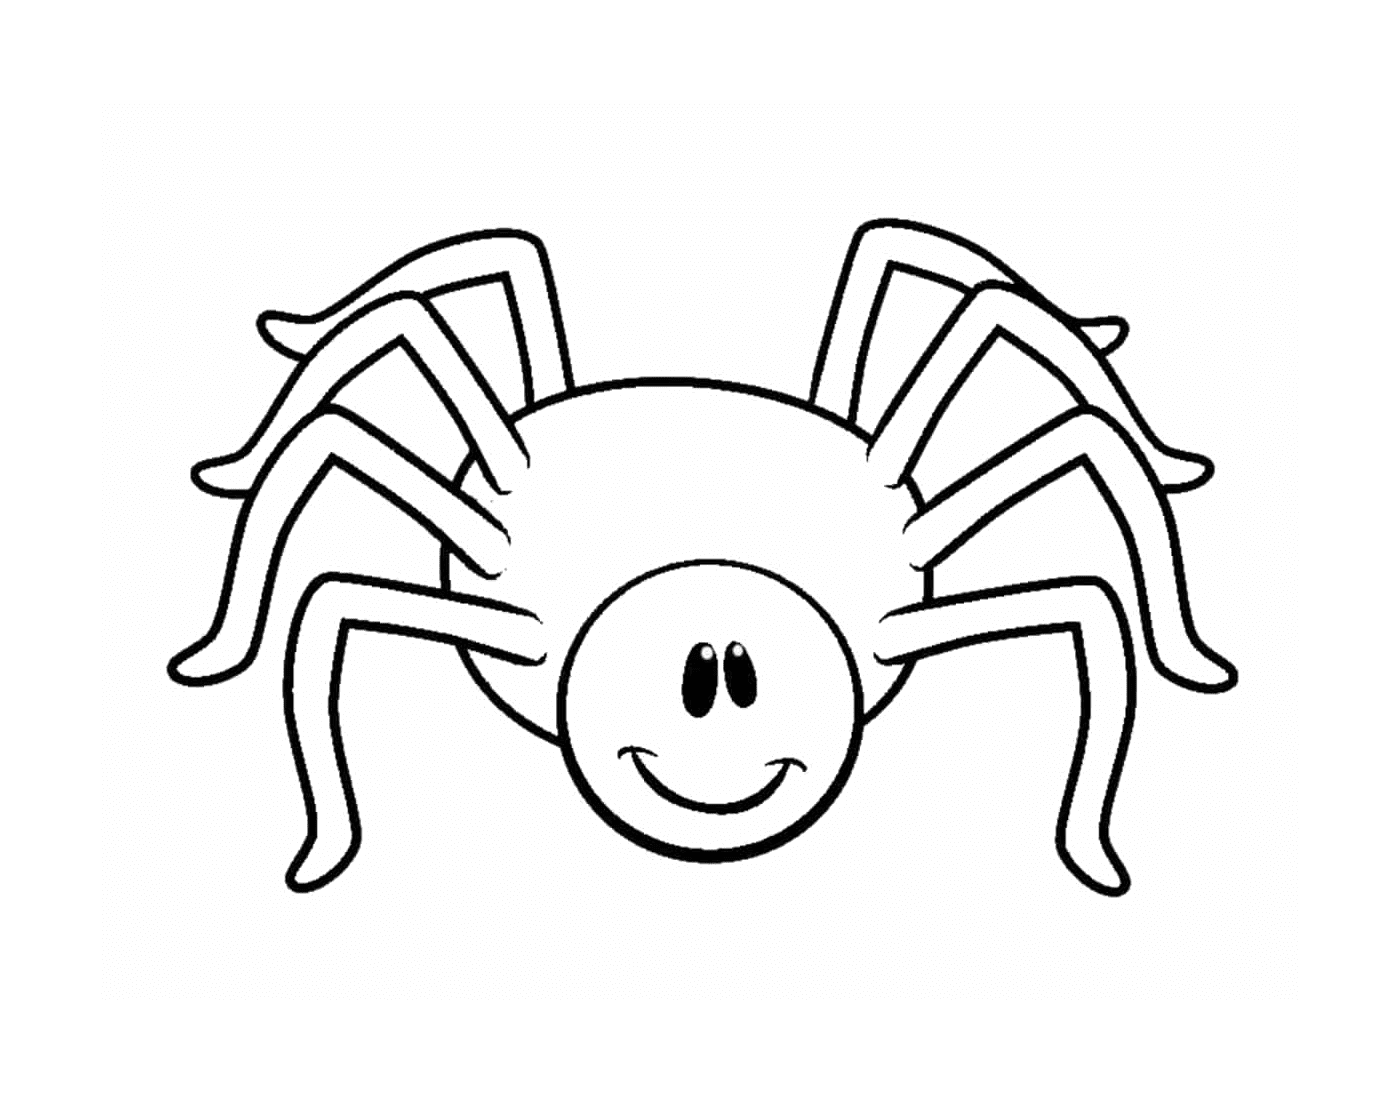   Une araignée souriante 